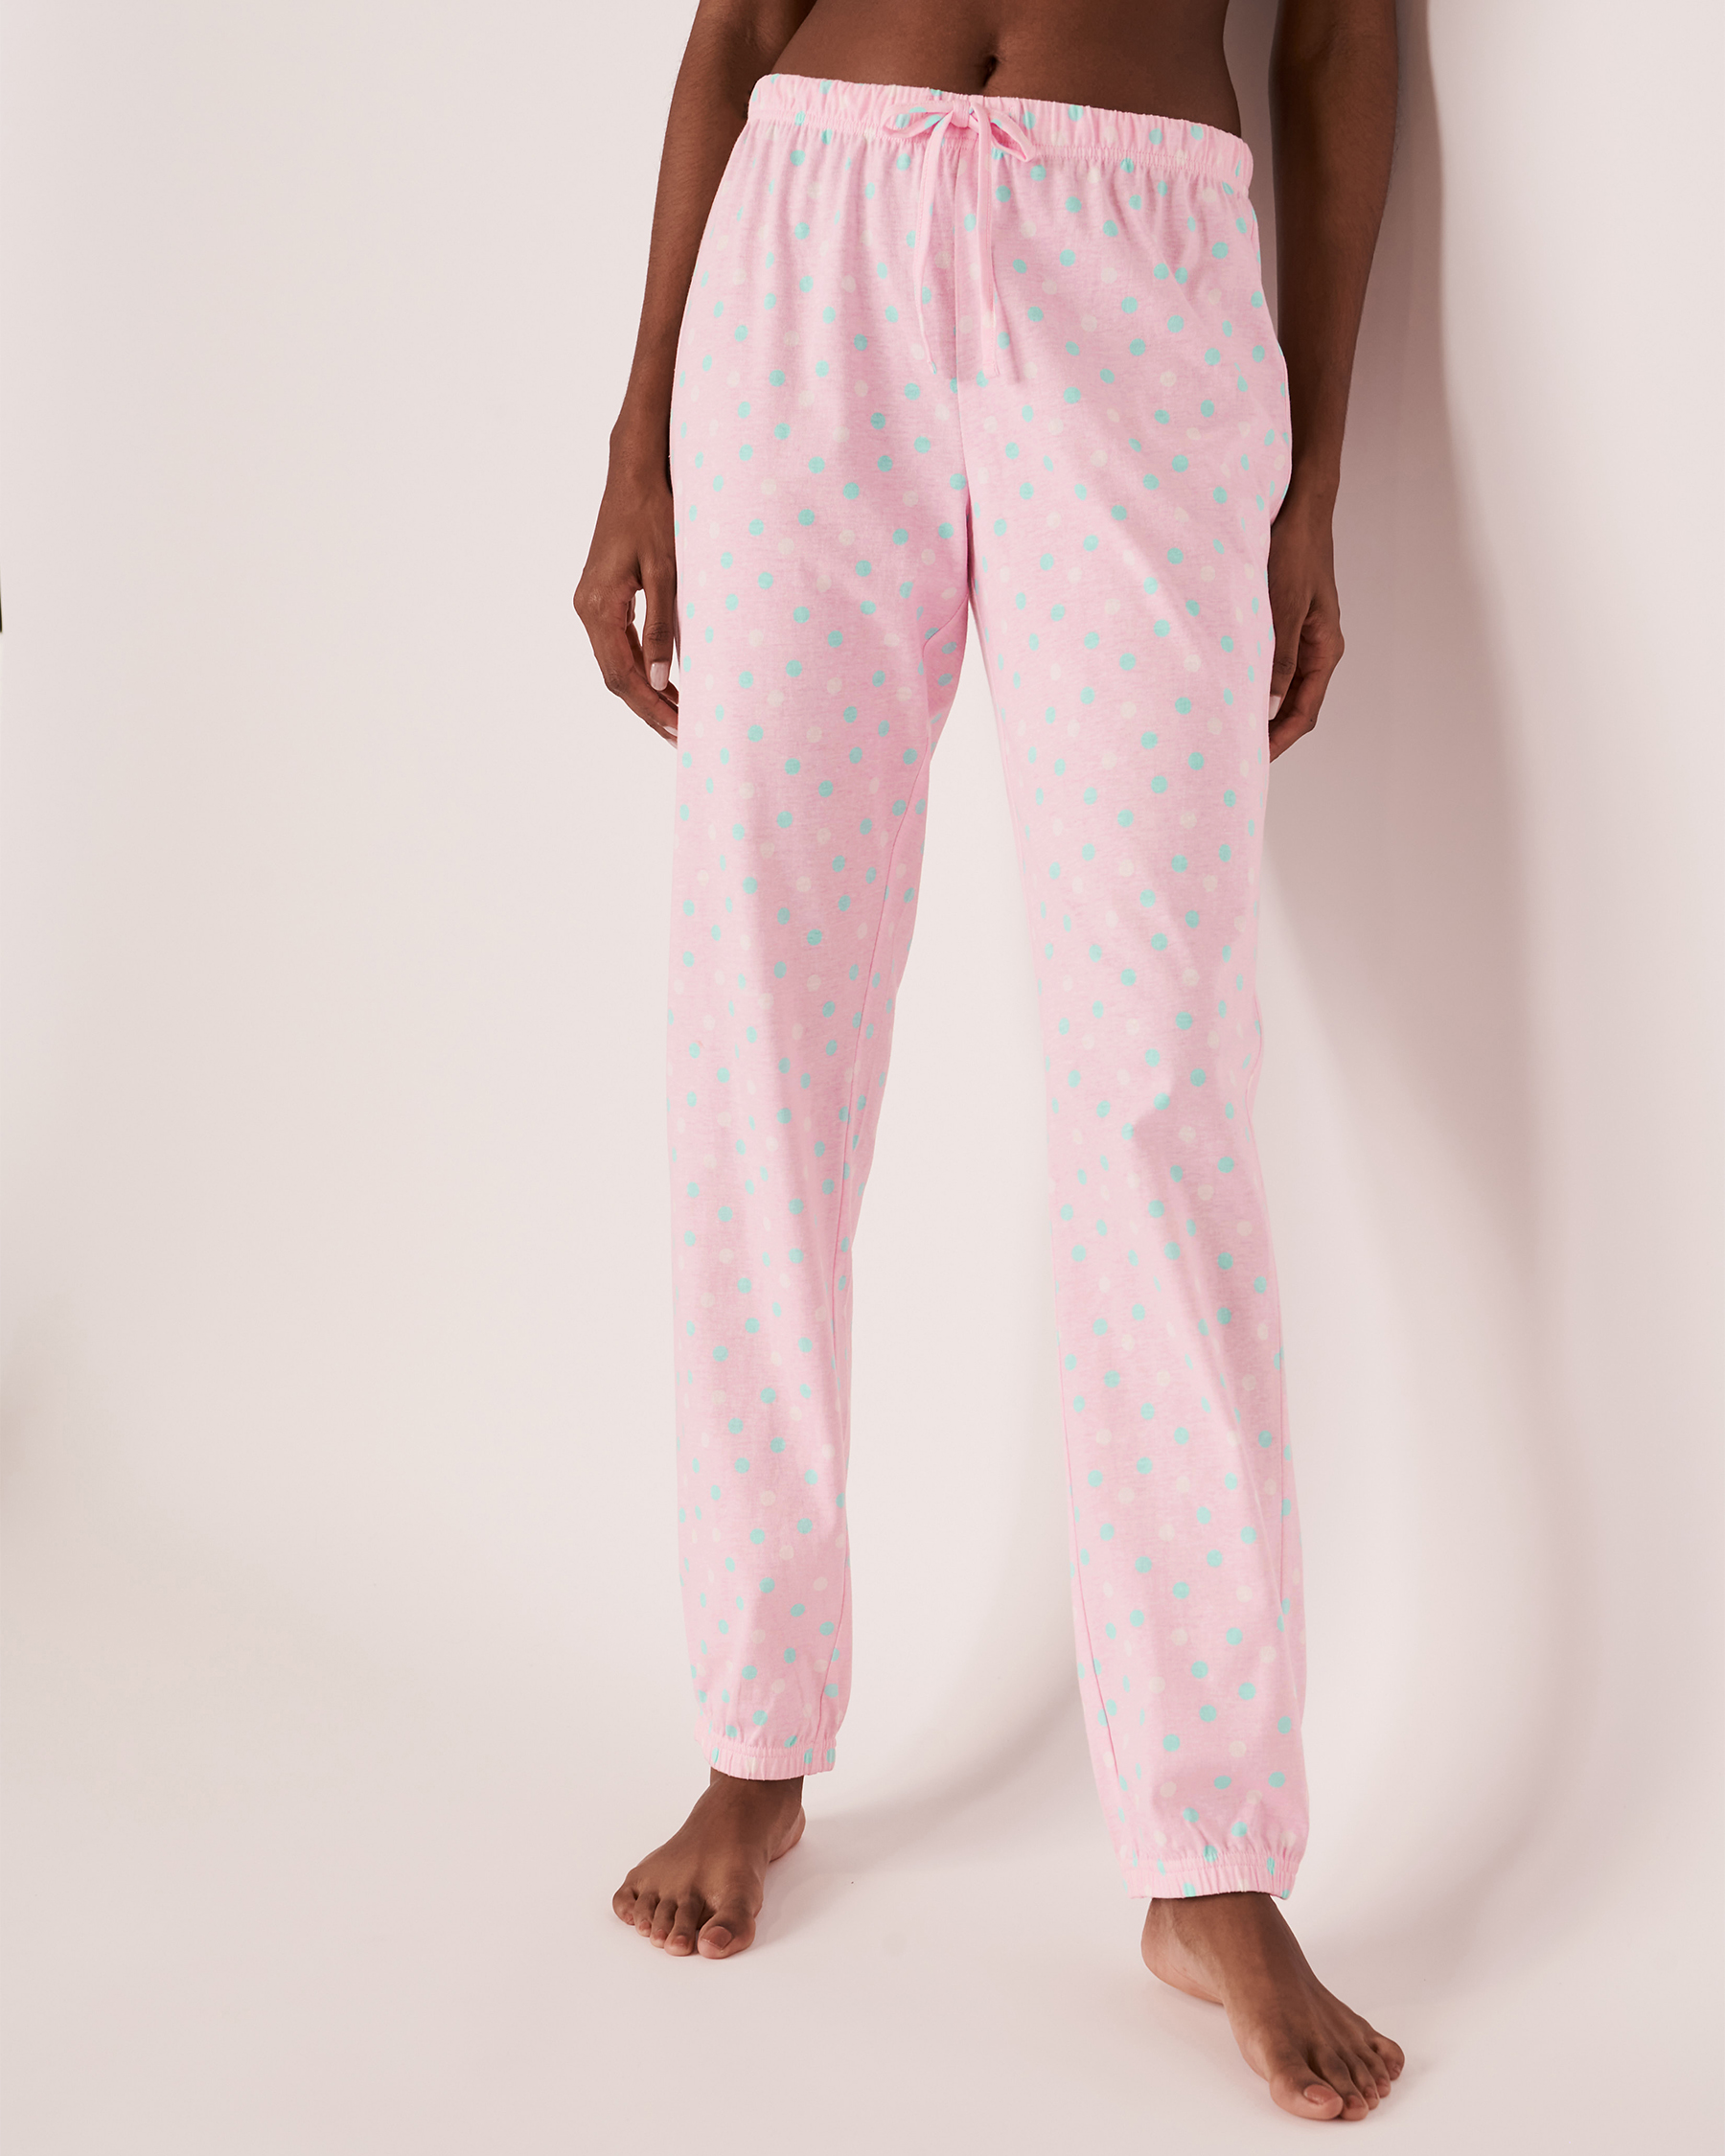 LA VIE EN ROSE Fitted Ankle Pyjama Pants Pink dots 40200232 - View1